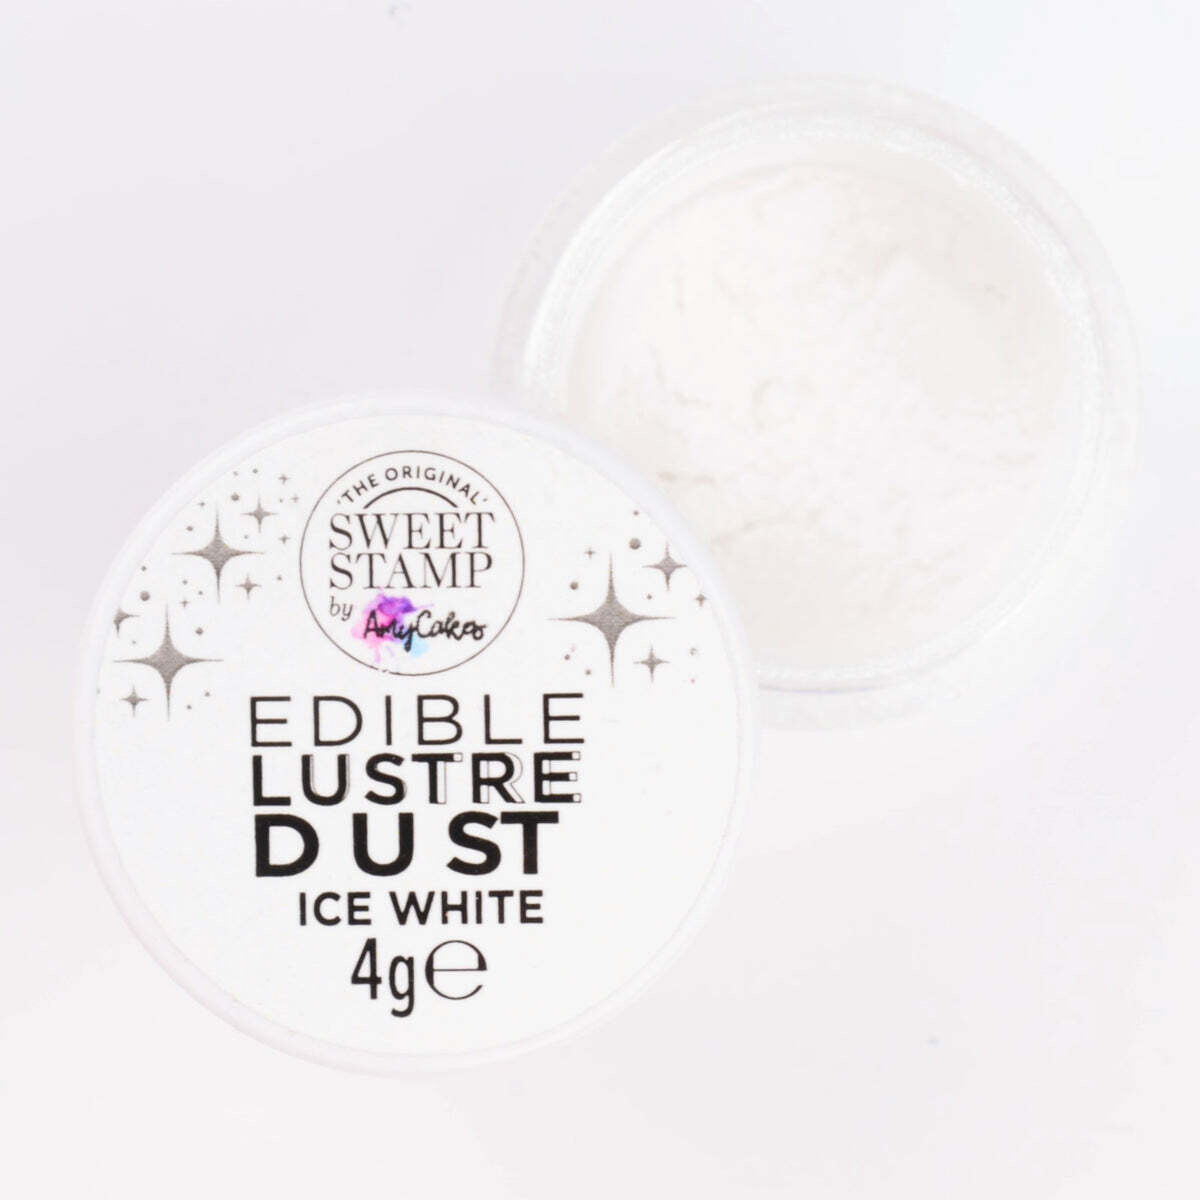 Sweet Stamp Edible Lustre Dust -ICE WHITE - Βρώσιμη σκόνη γυαλιστερή Λευκή 4g